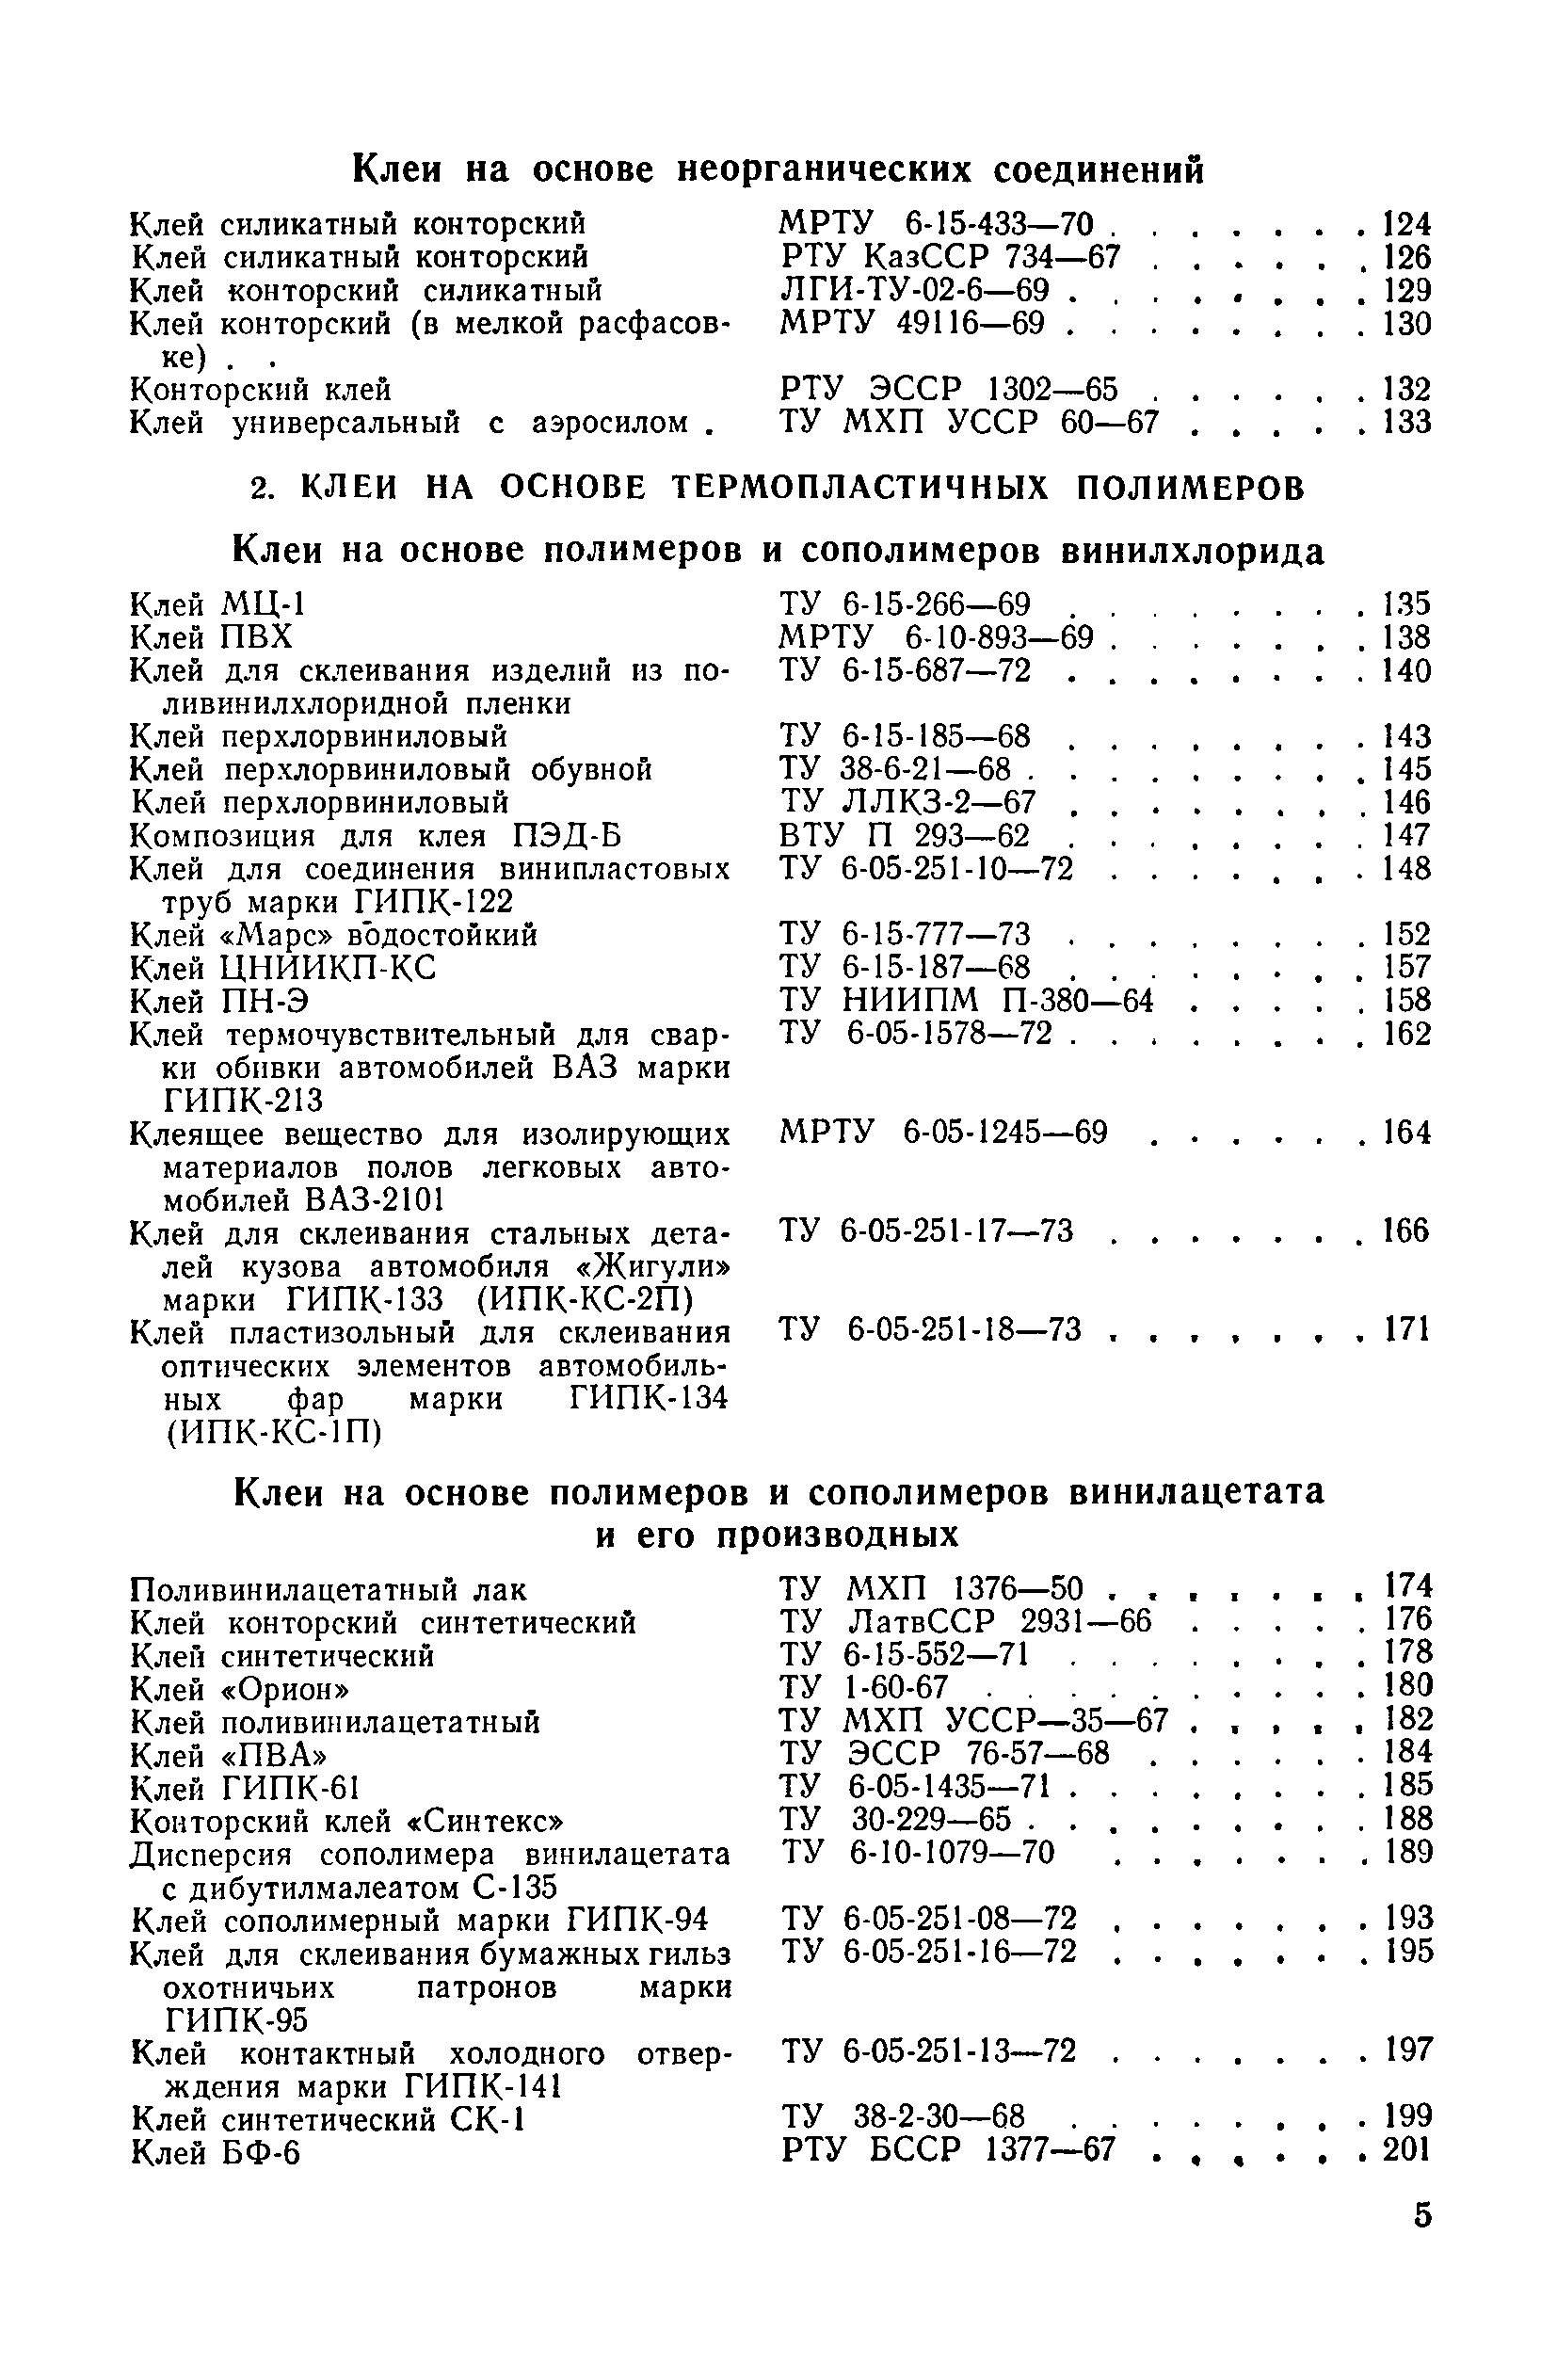 ТУ 84-20-68